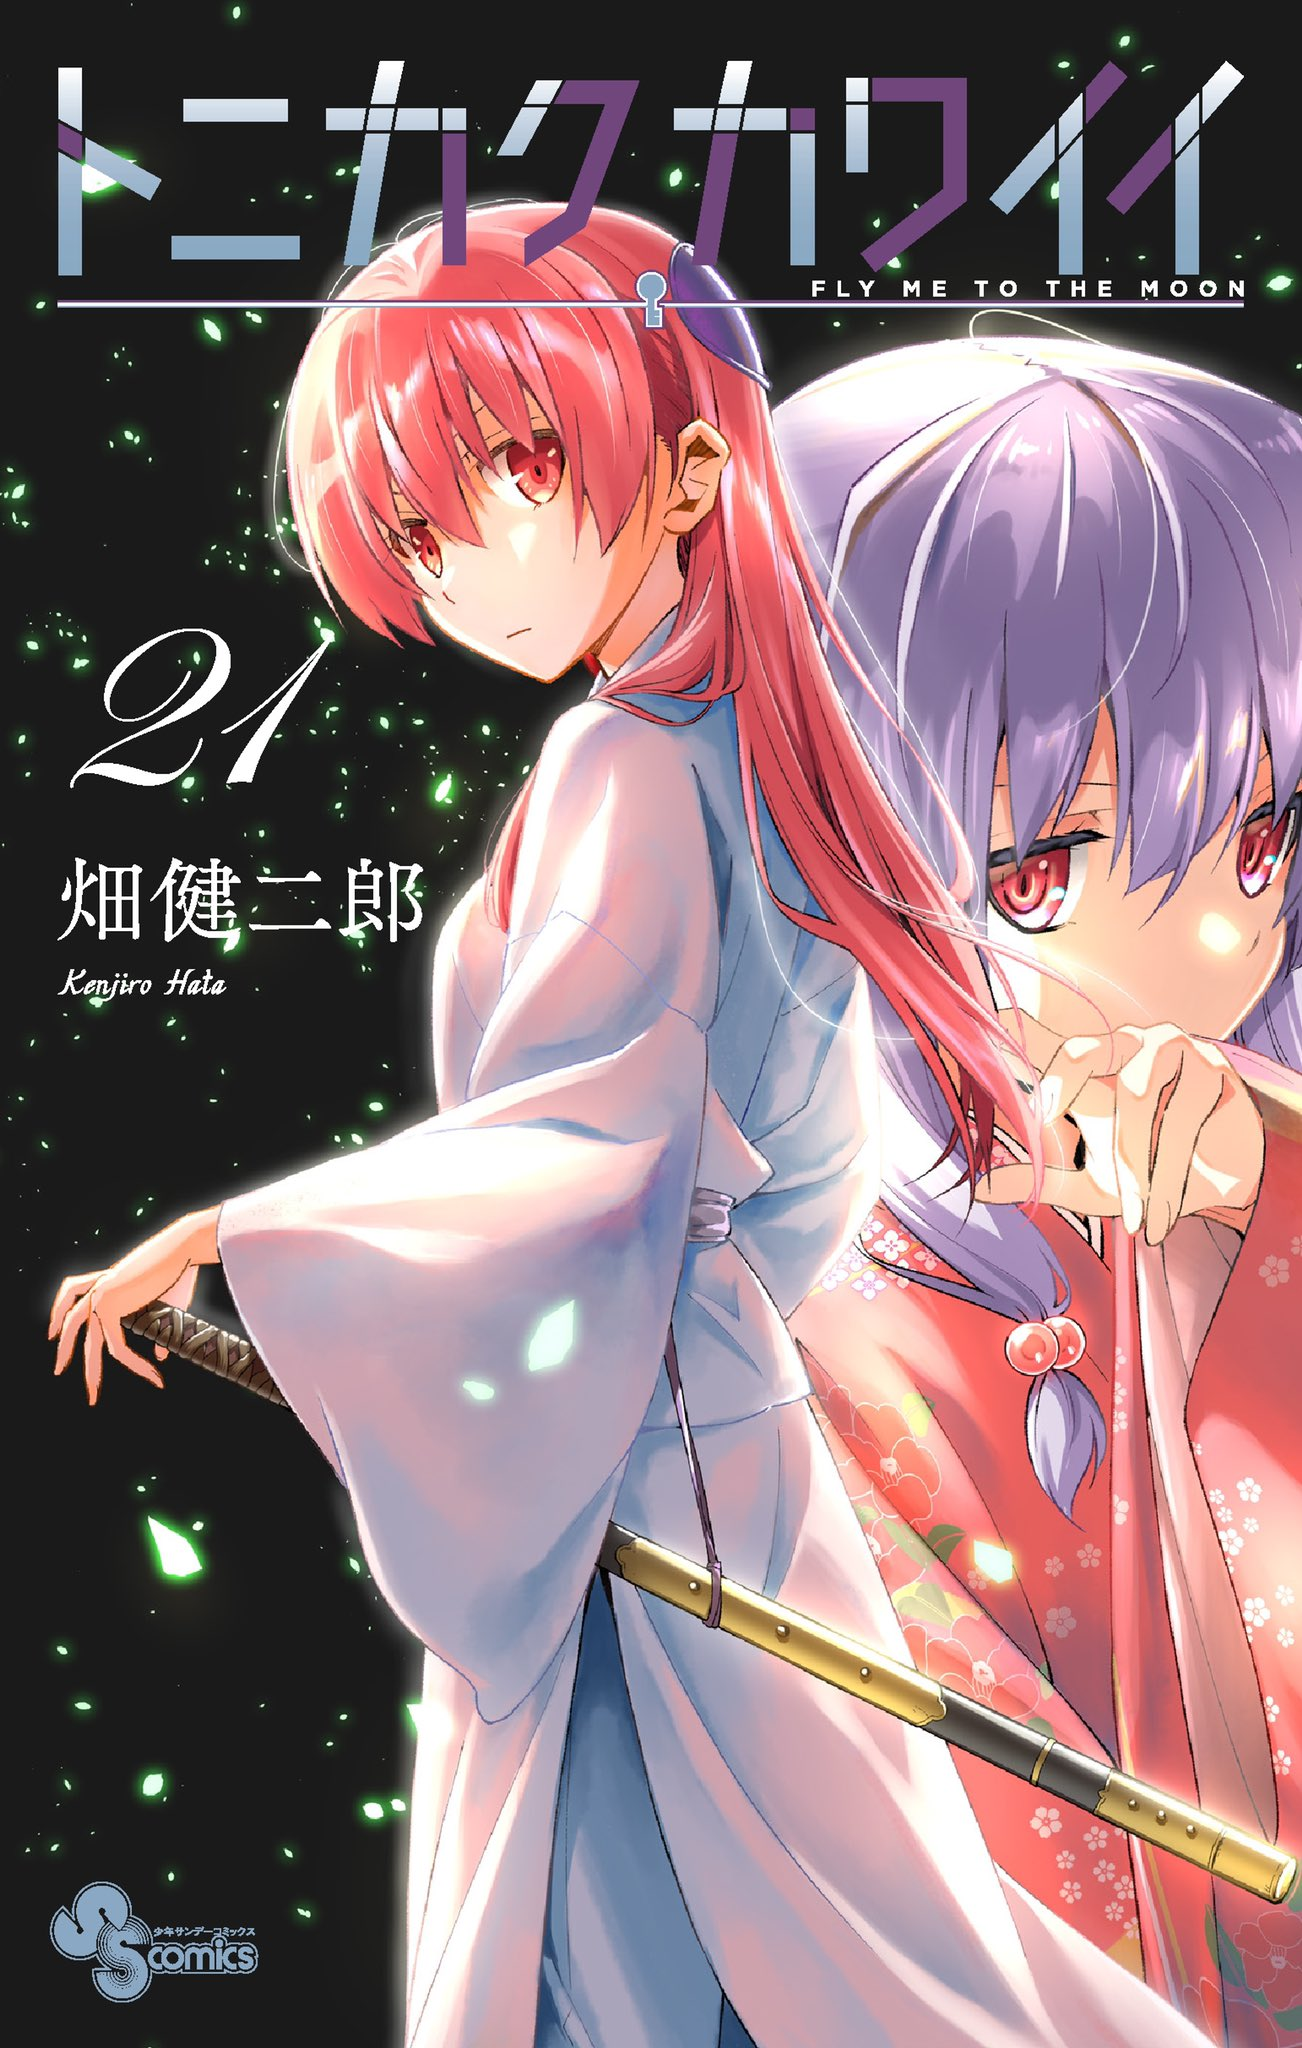 Tonikaku Kawaii special episode manga volume 21 cover